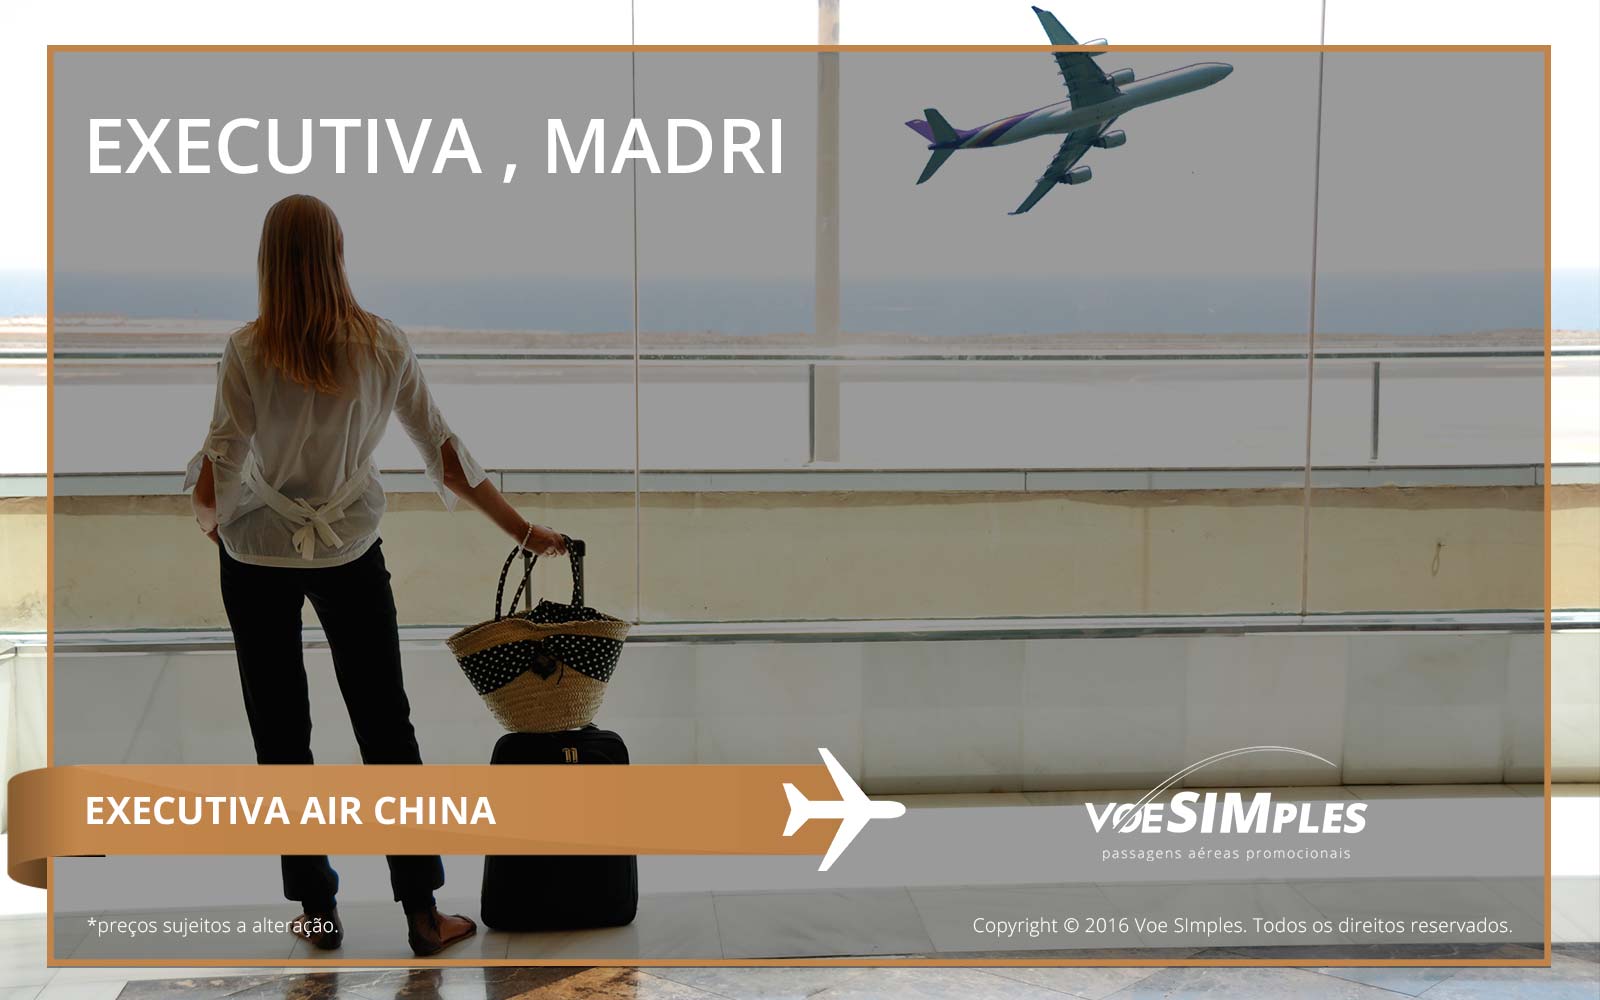 Passagem aérea Executiva Air China para Madri